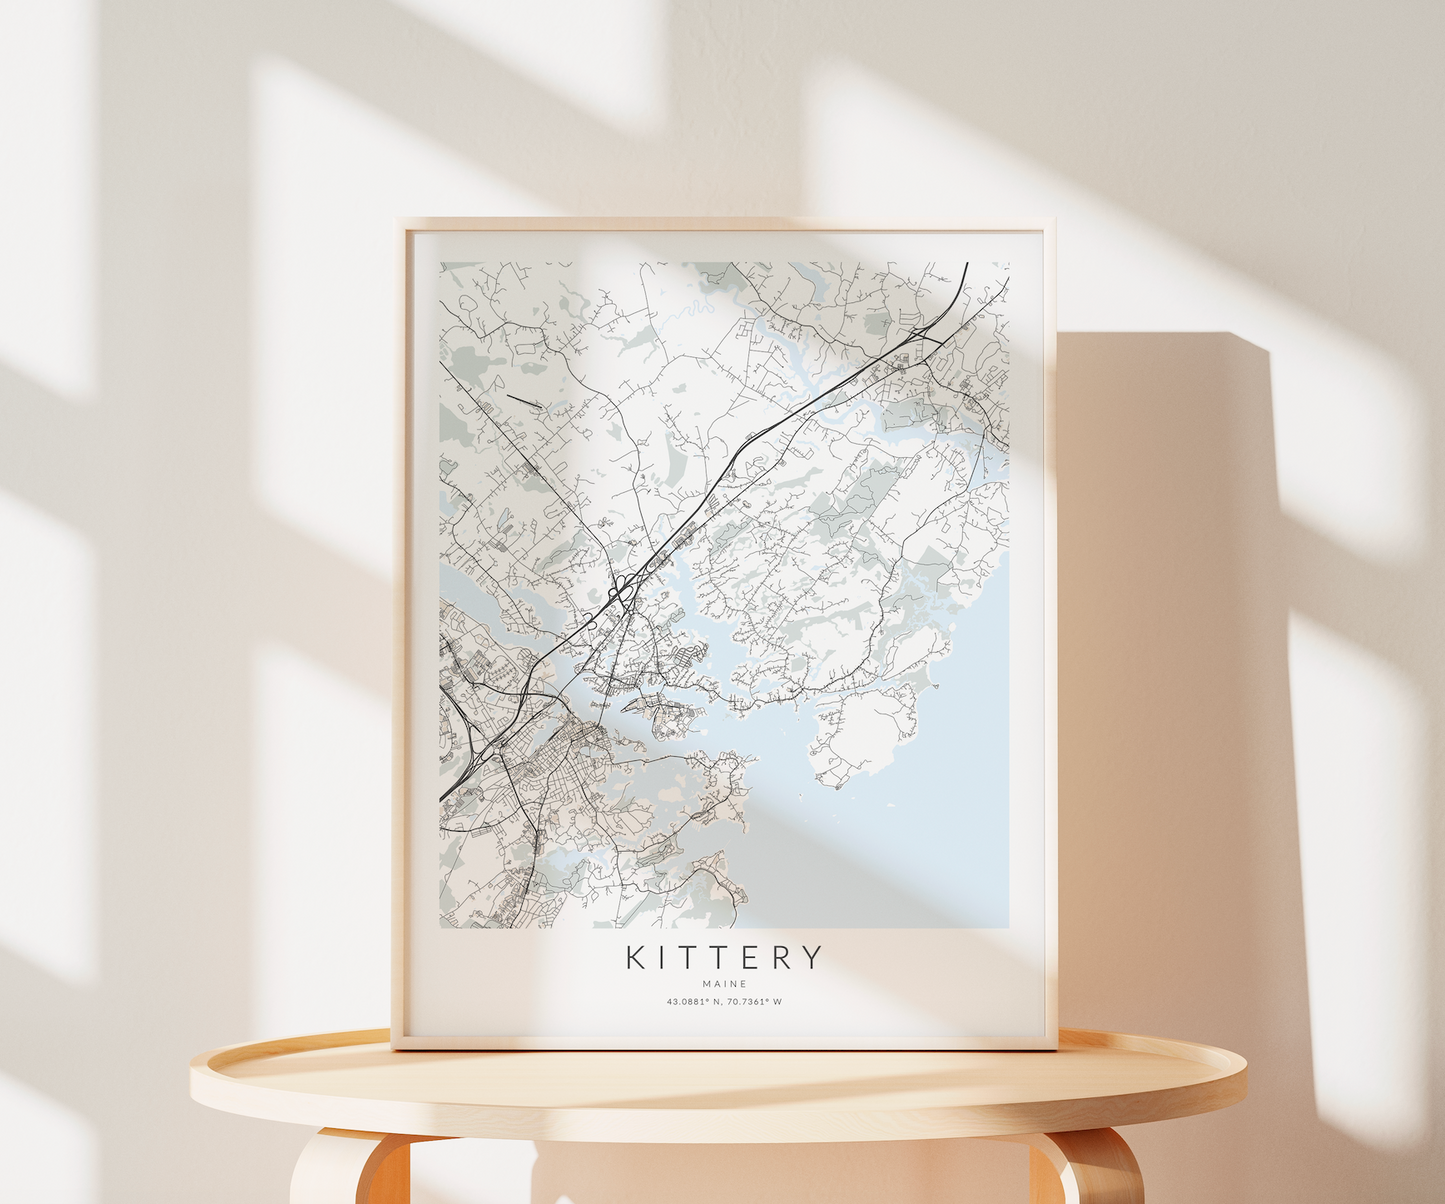 Kittery Map Print